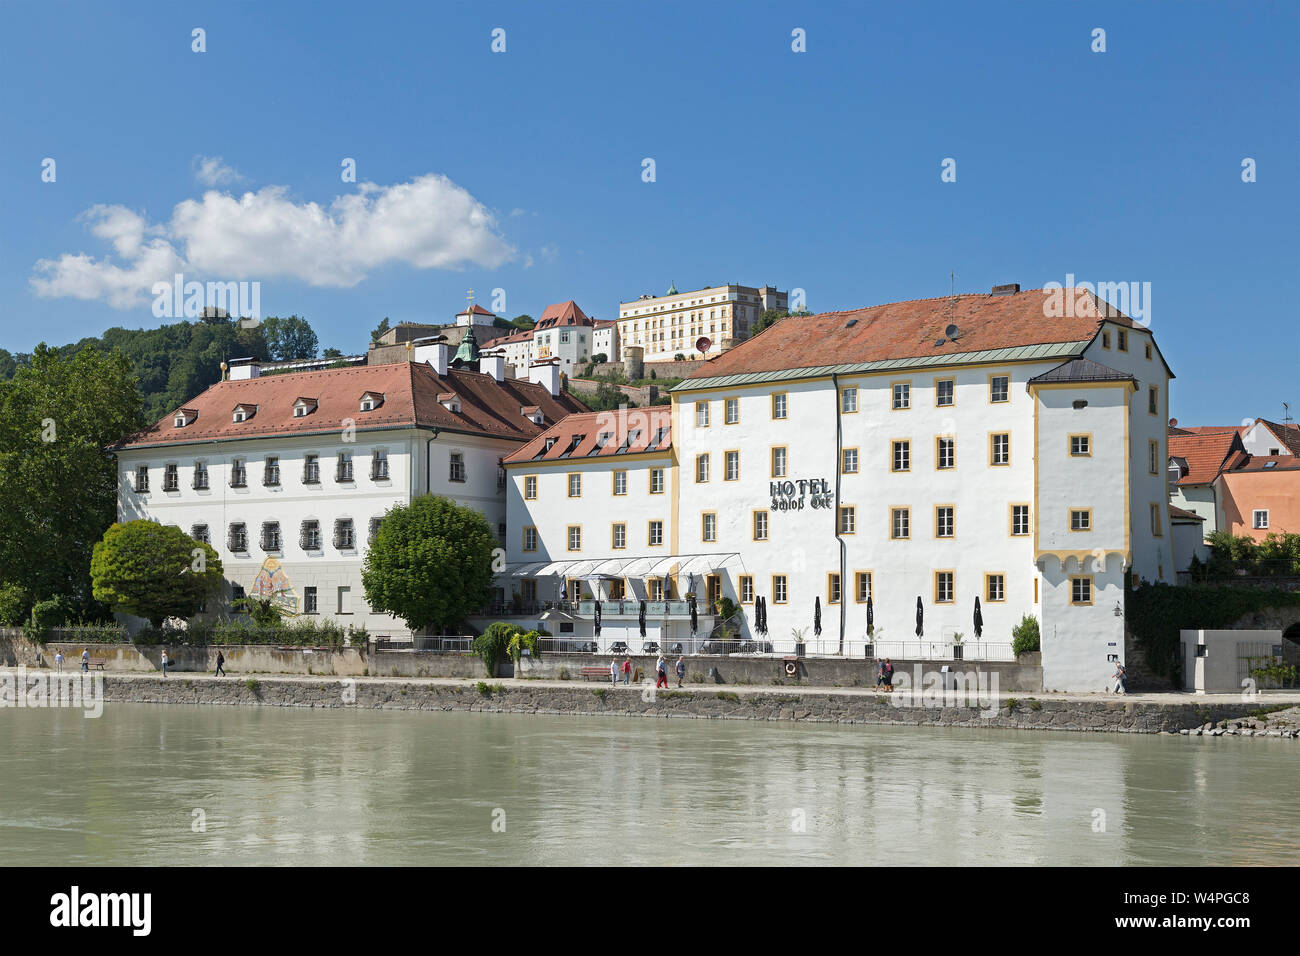 Hotel Schloss Ort and Veste Oberhaus (upper fortress), Passau, Lower Bavaria, Bavaria, Germany Stock Photo